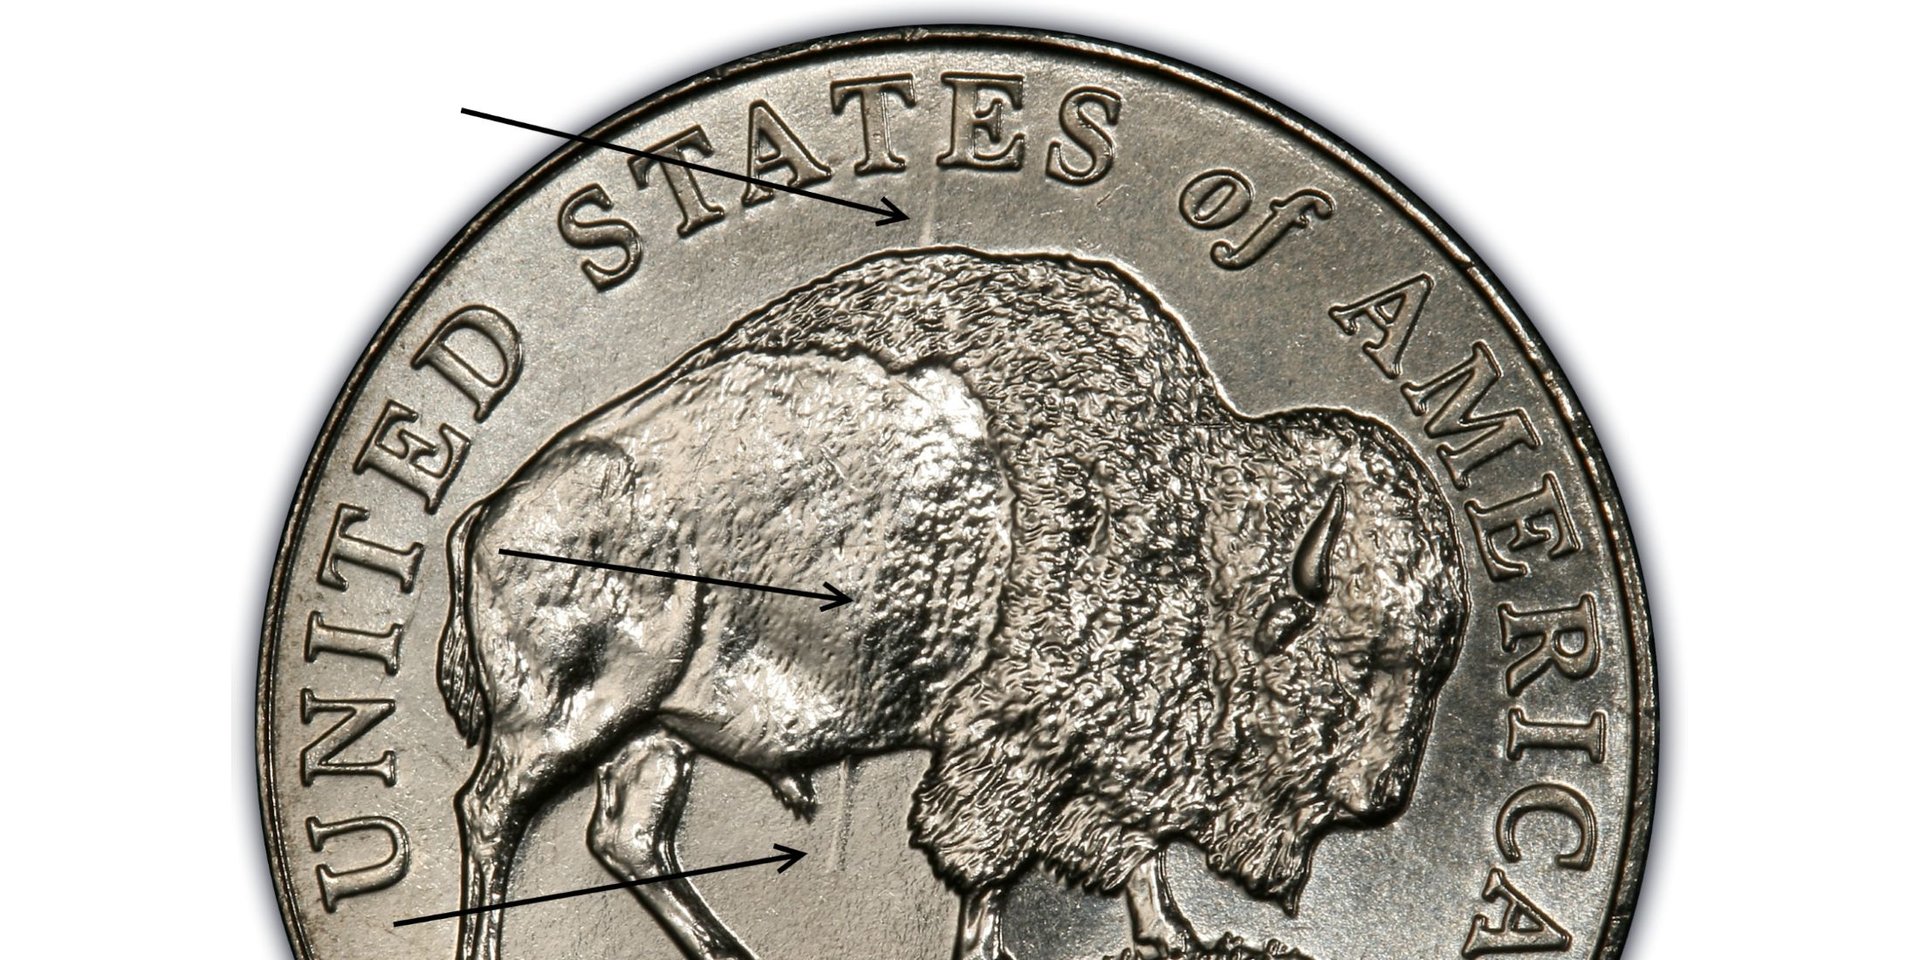 2005 P mint mark nickel 3 legged buffalo? | Coin Talk